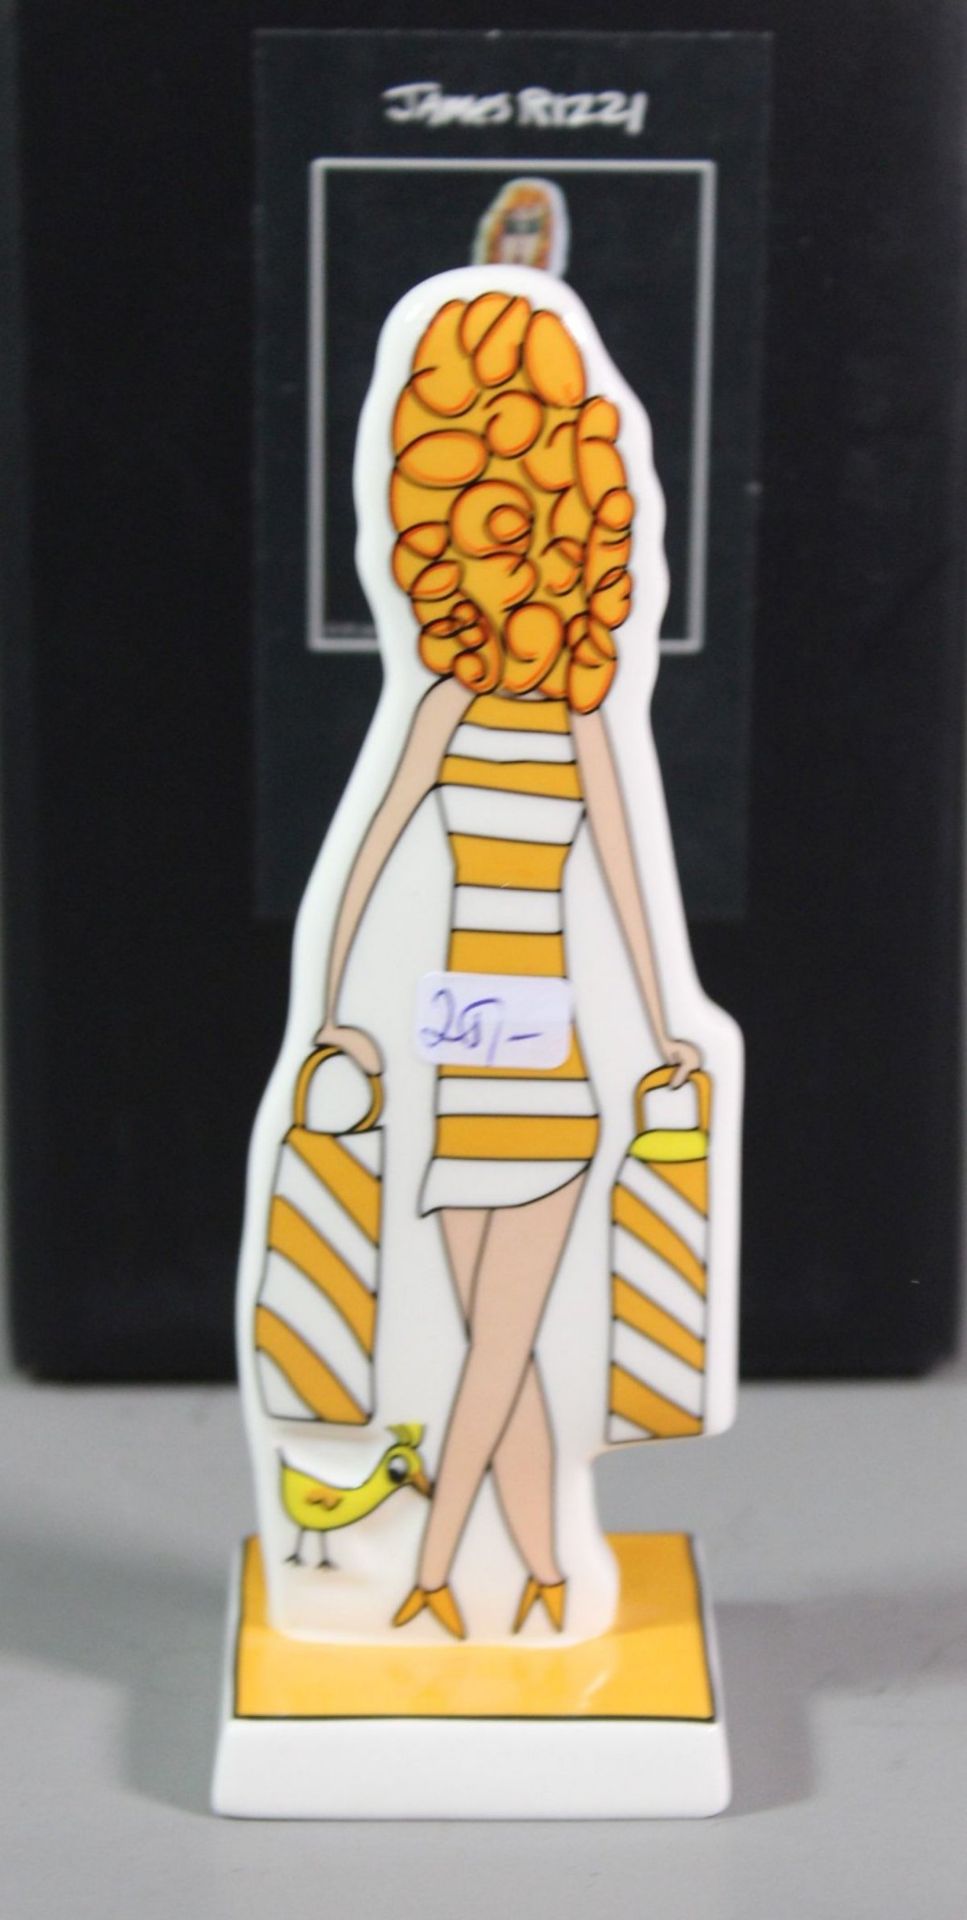 Goebel-Figur "Shopping Girl", Artis Orbis, Entw. James Rizzi, orig. Karton, ca. H-13,5cm. - Image 2 of 3